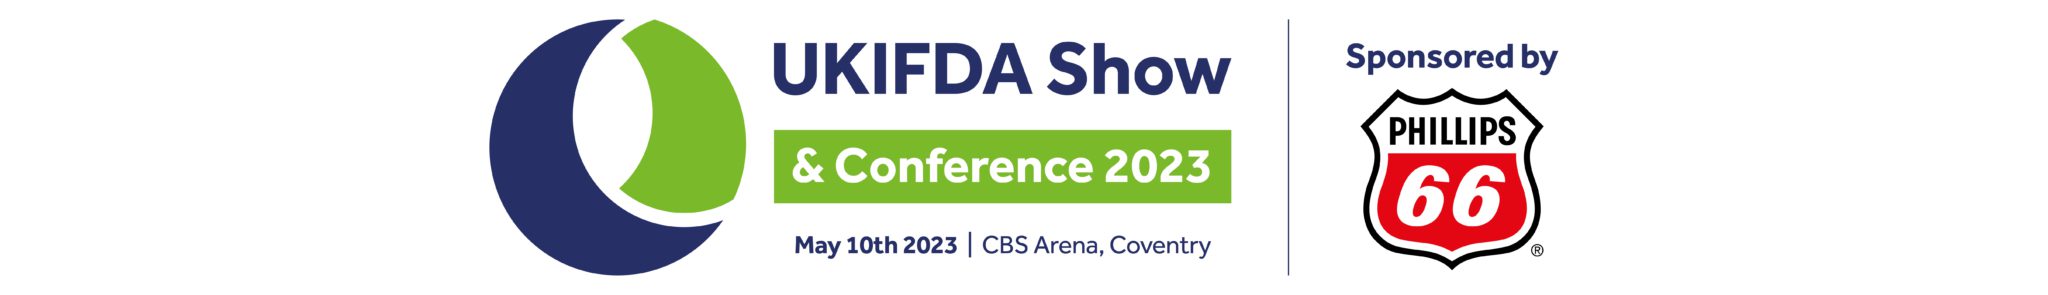 UKIFDA Conference 2023